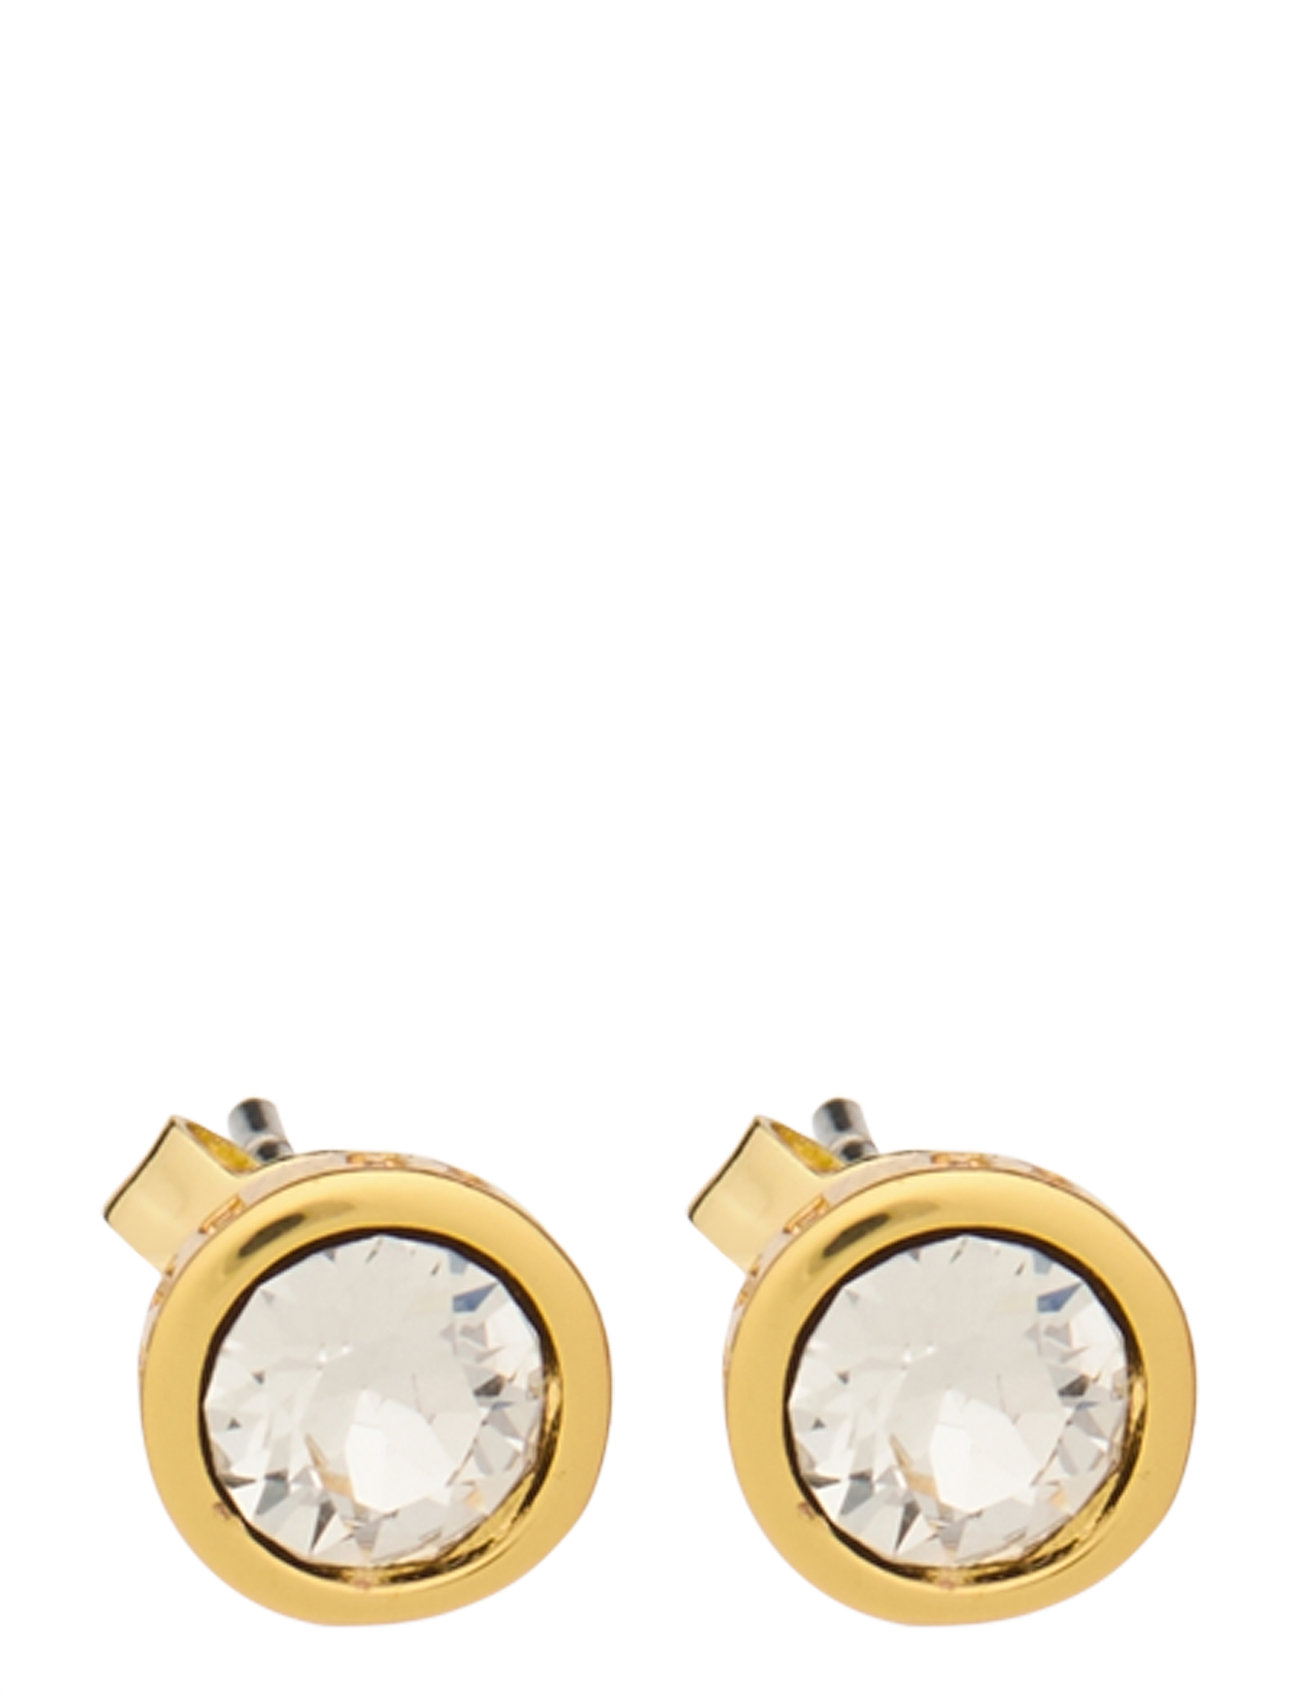 Sinaa Accessories Jewellery Earrings Studs Kulta Ted Baker